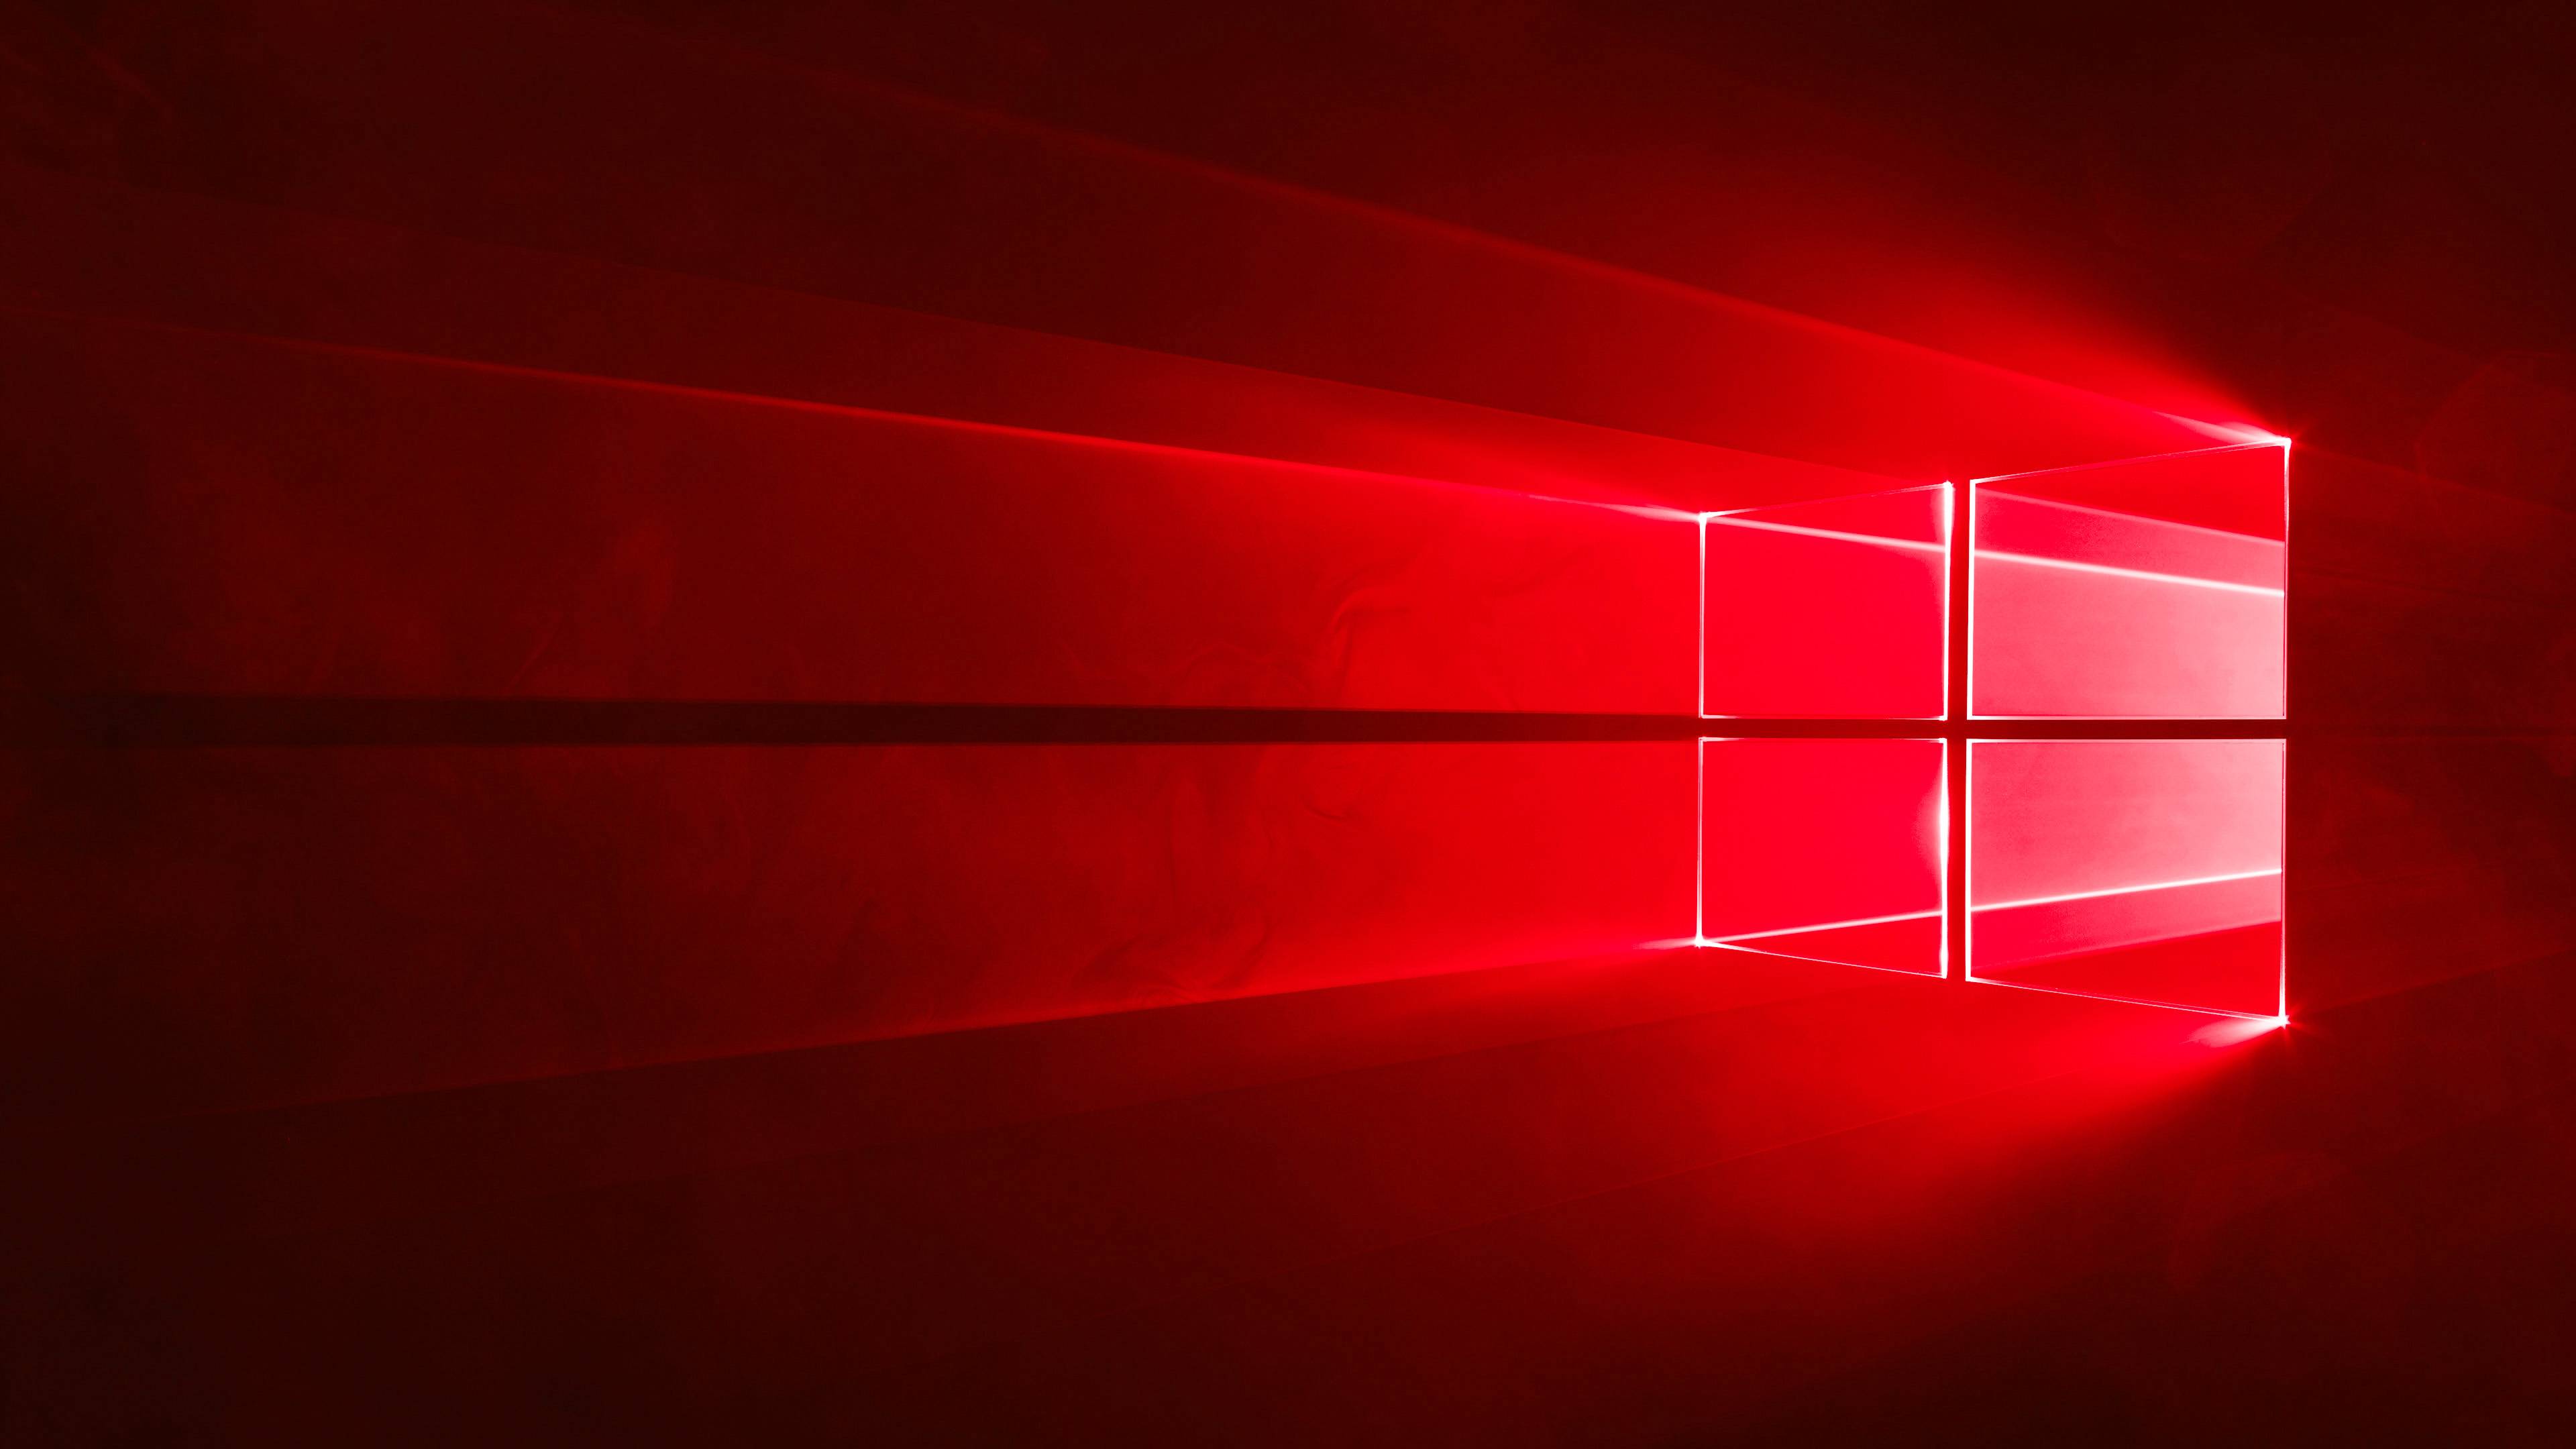 Wallpaper Themes Windows Microsoft Red